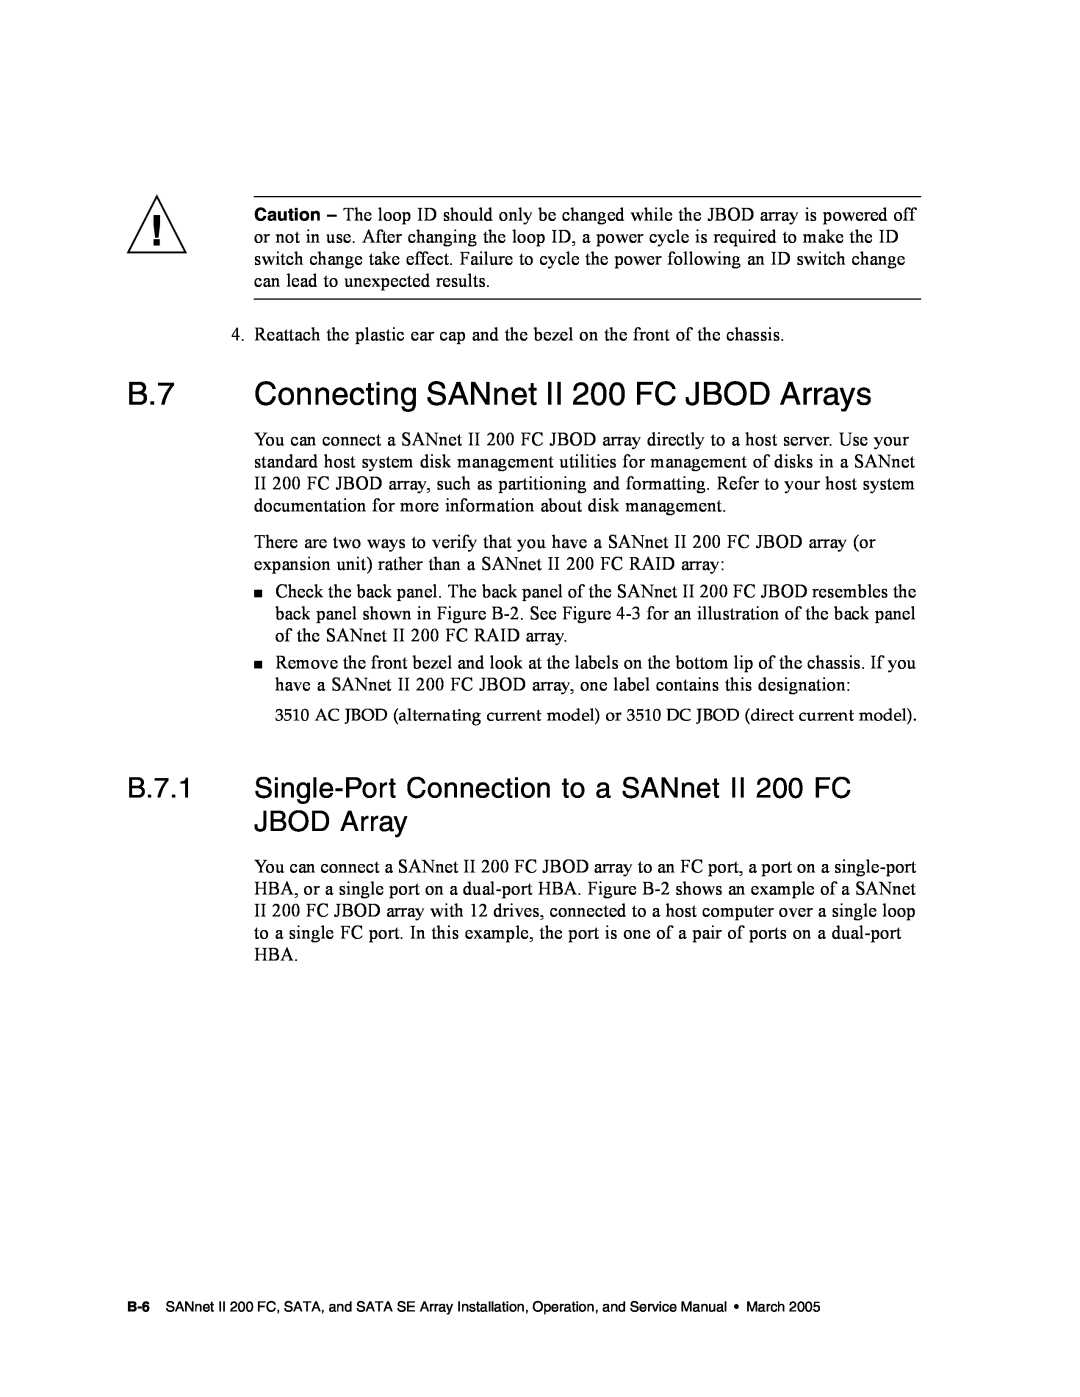 Dot Hill Systems service manual B.7 Connecting SANnet II 200 FC JBOD Arrays 